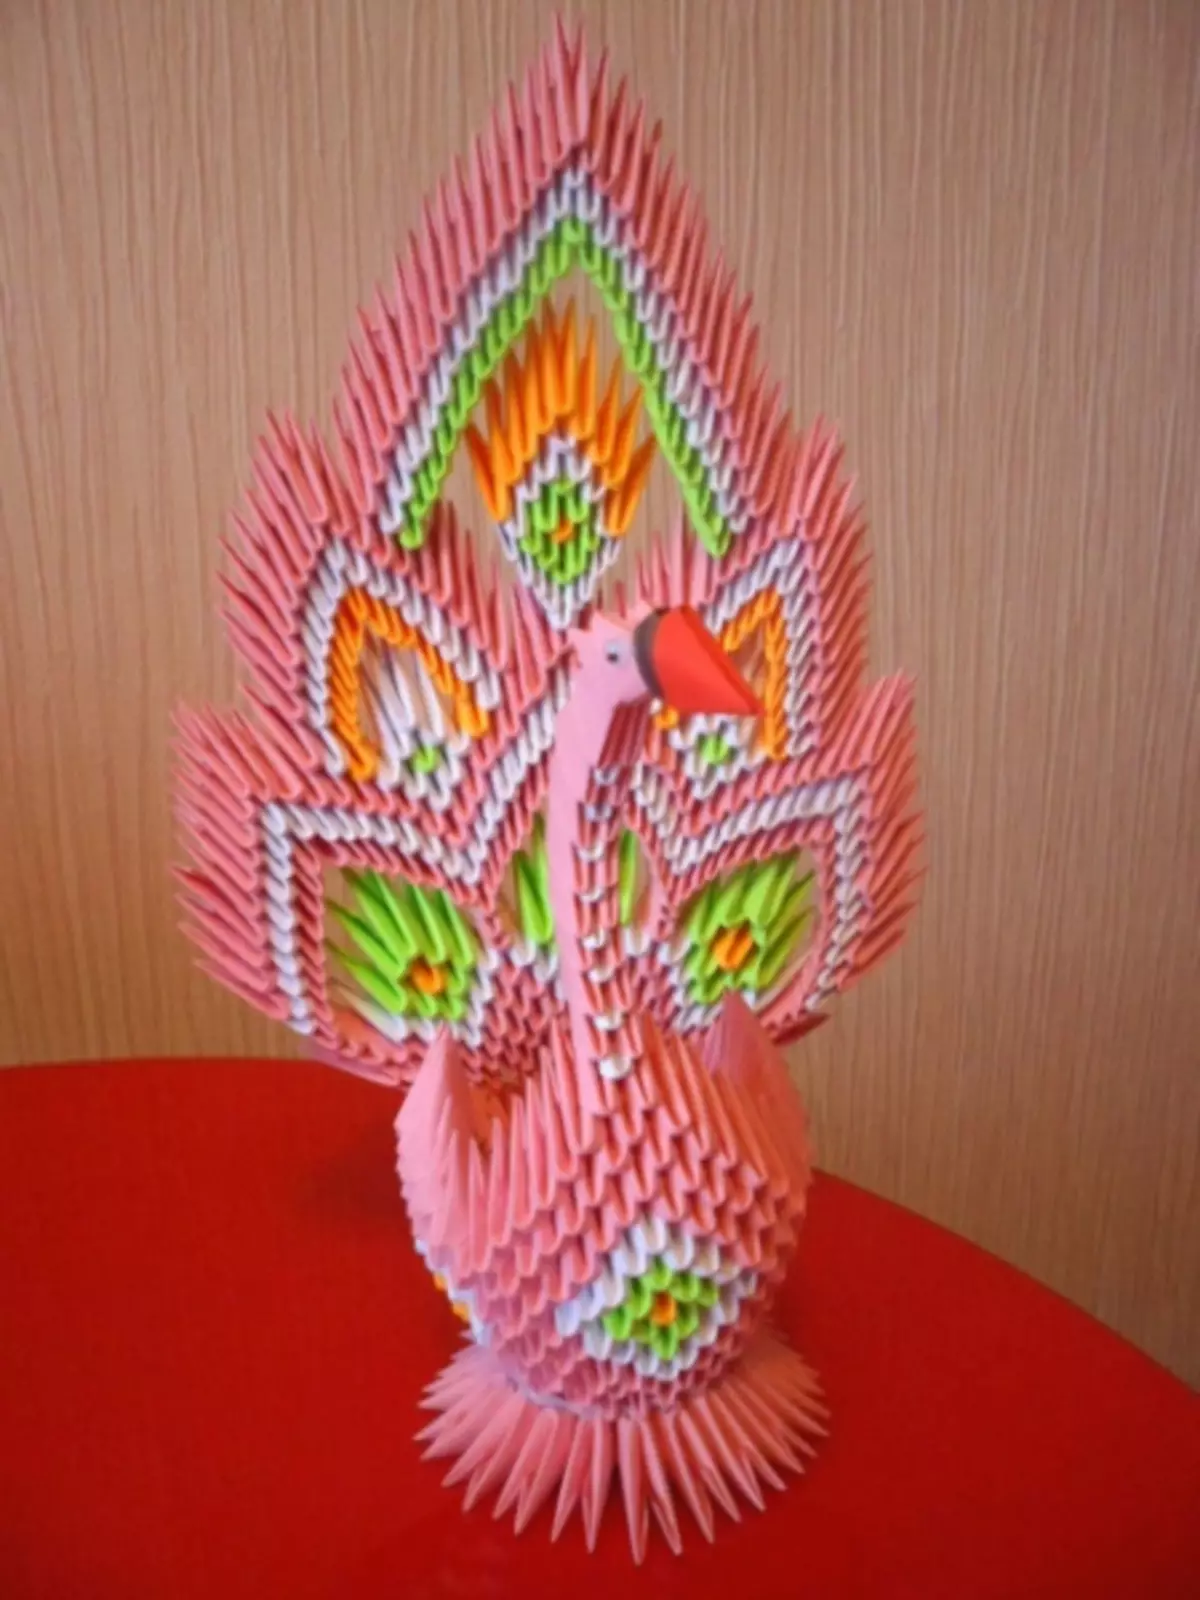 Impapuro origami inyoni: Nigute ushobora gukora ifishi yibanze hamwe na videwo